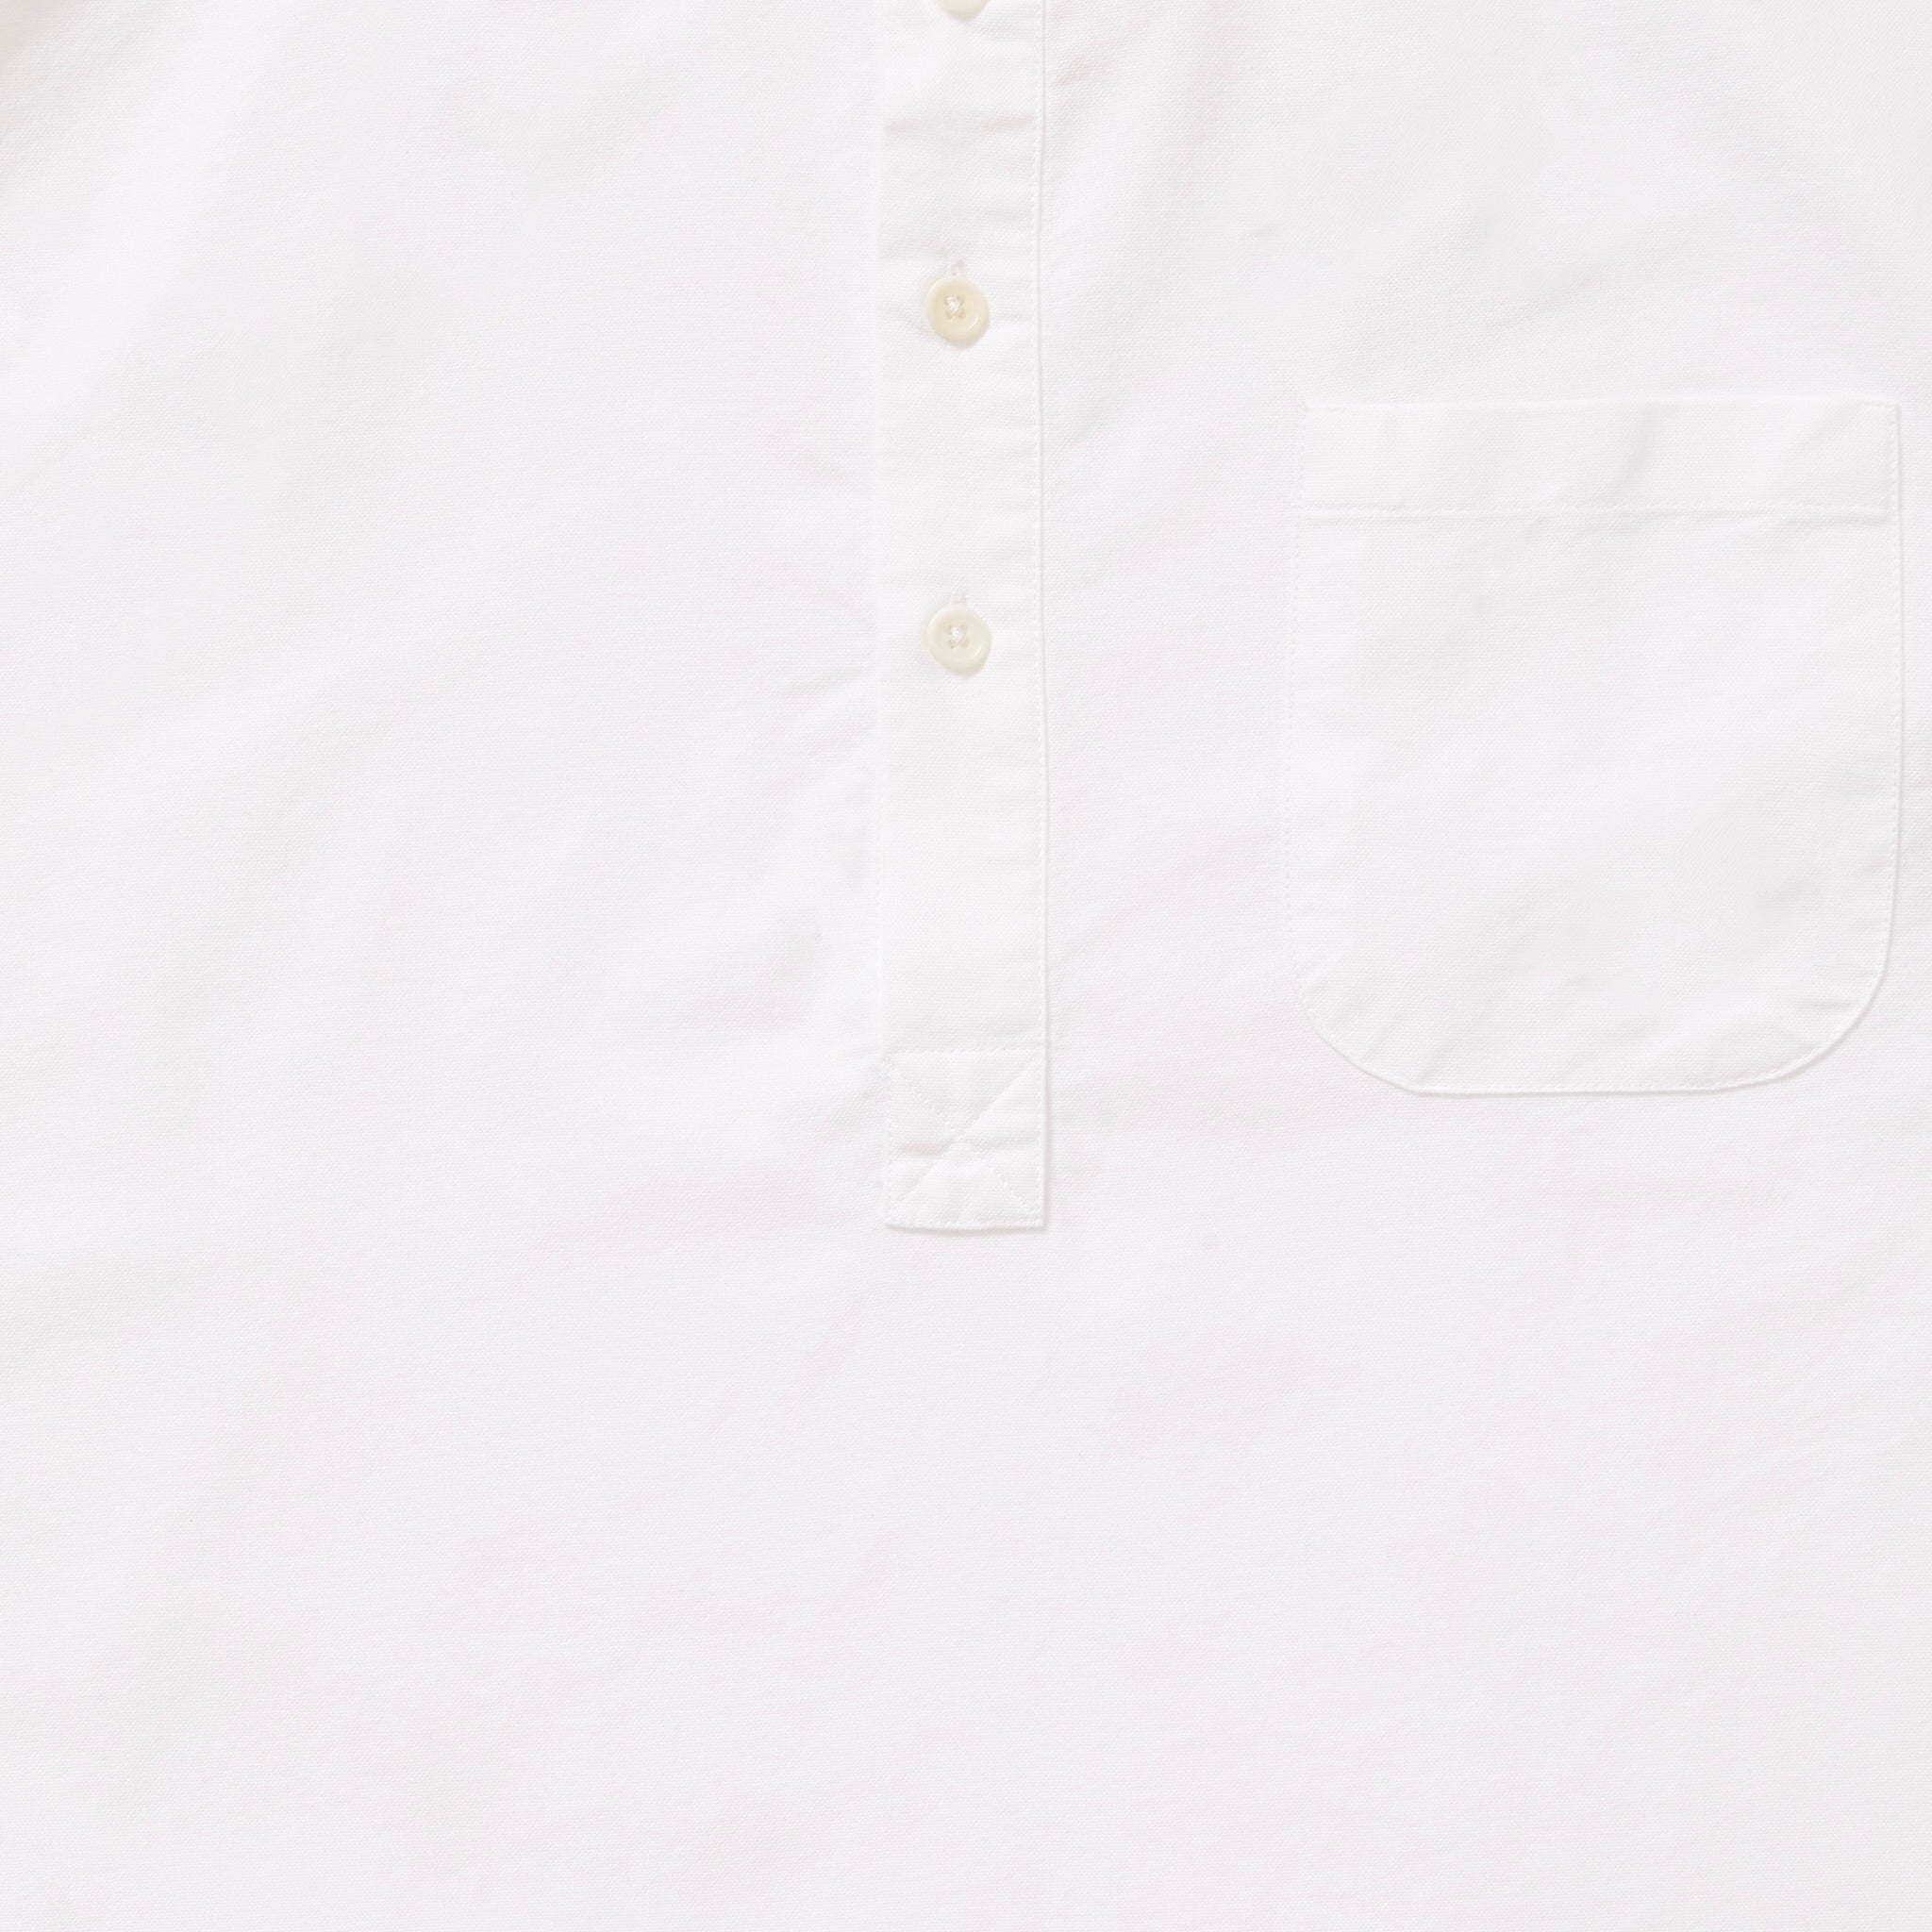 Fitz & Fro Organic Oxford Popover Shirt - White